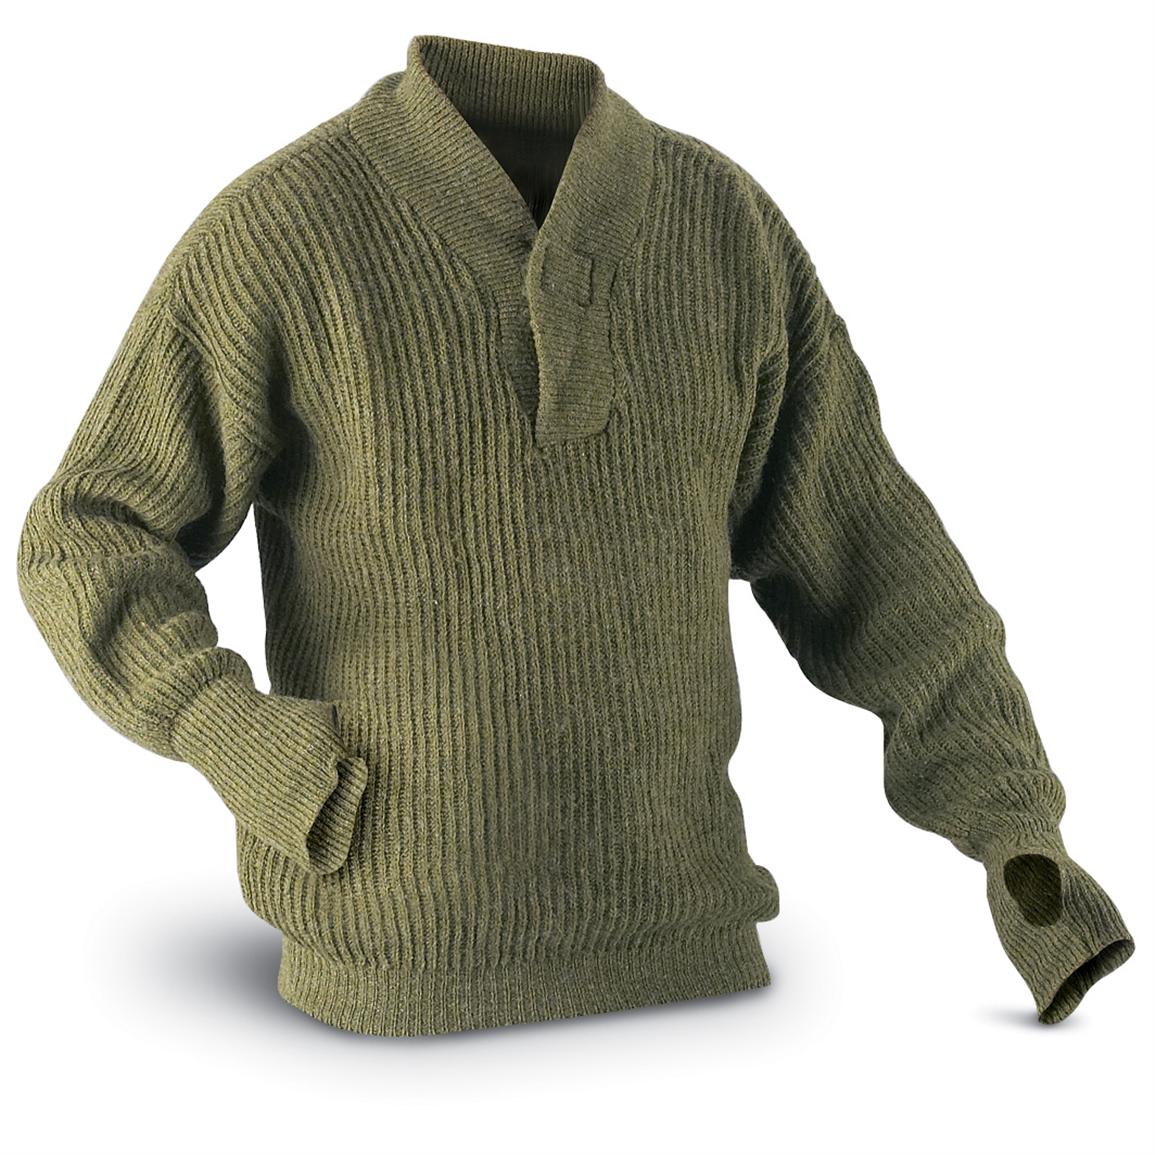 Used Norwegian Military Surplus Wool Sweater 87766, Military Sweaters